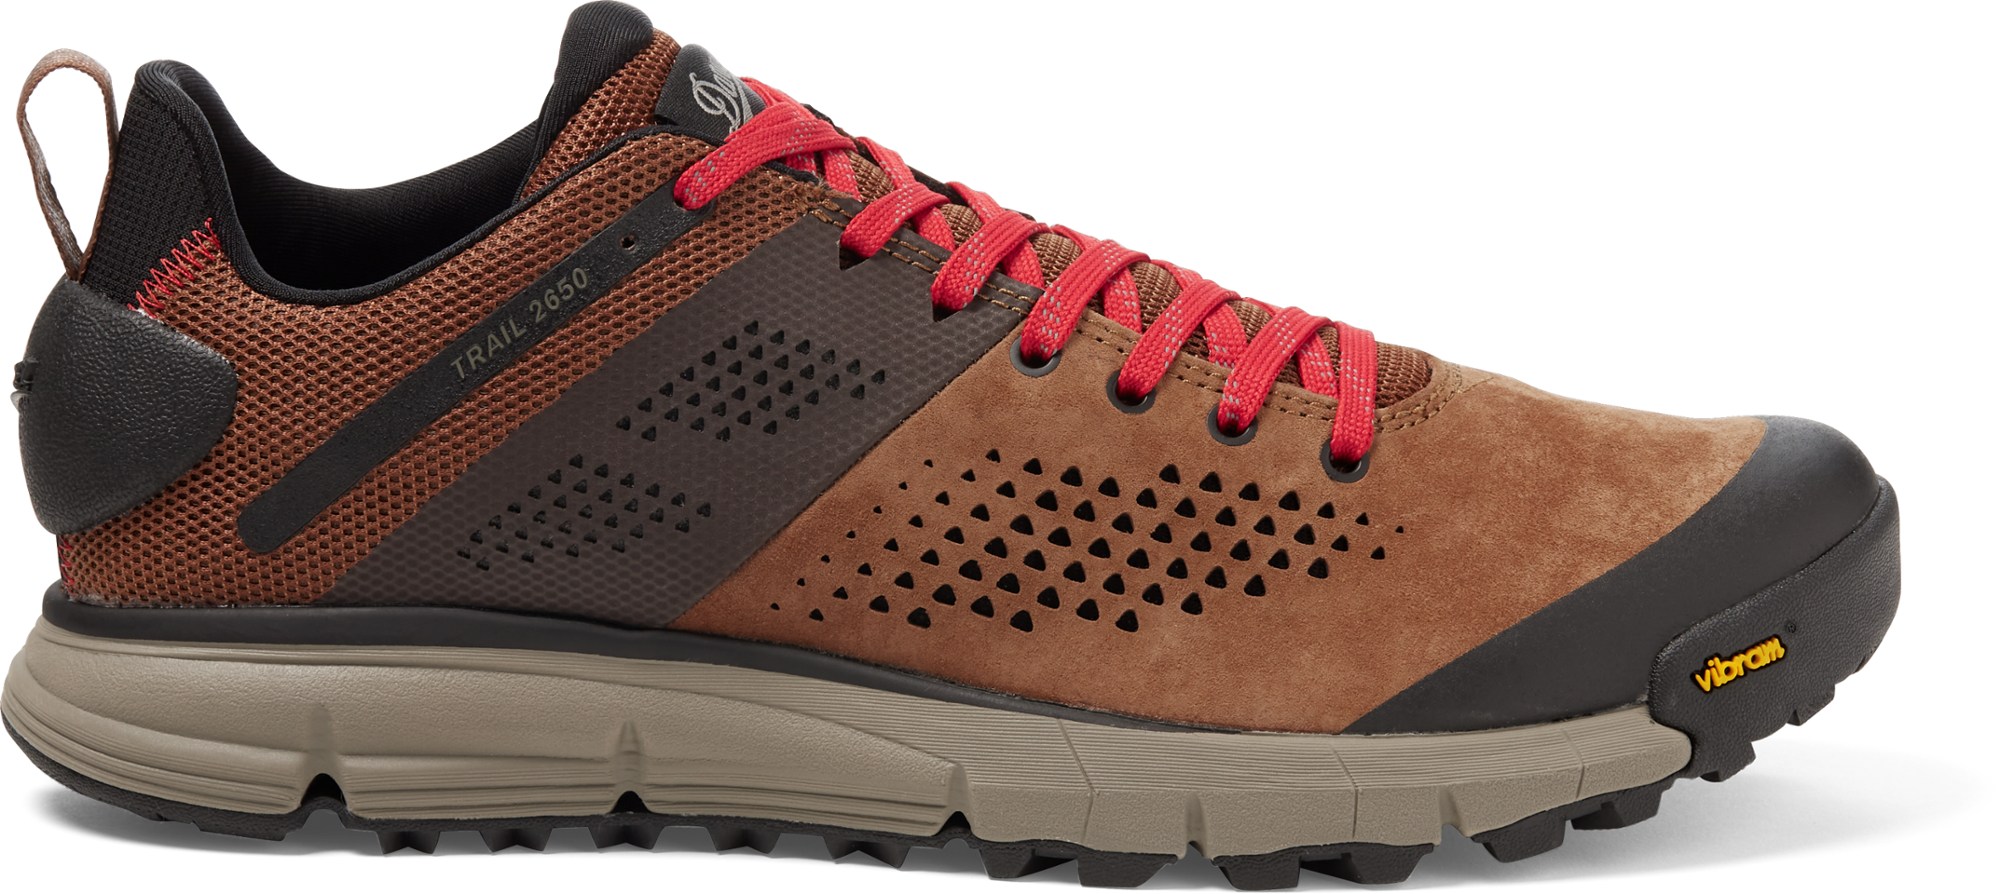 Danner Trail 2650 hiking shoe